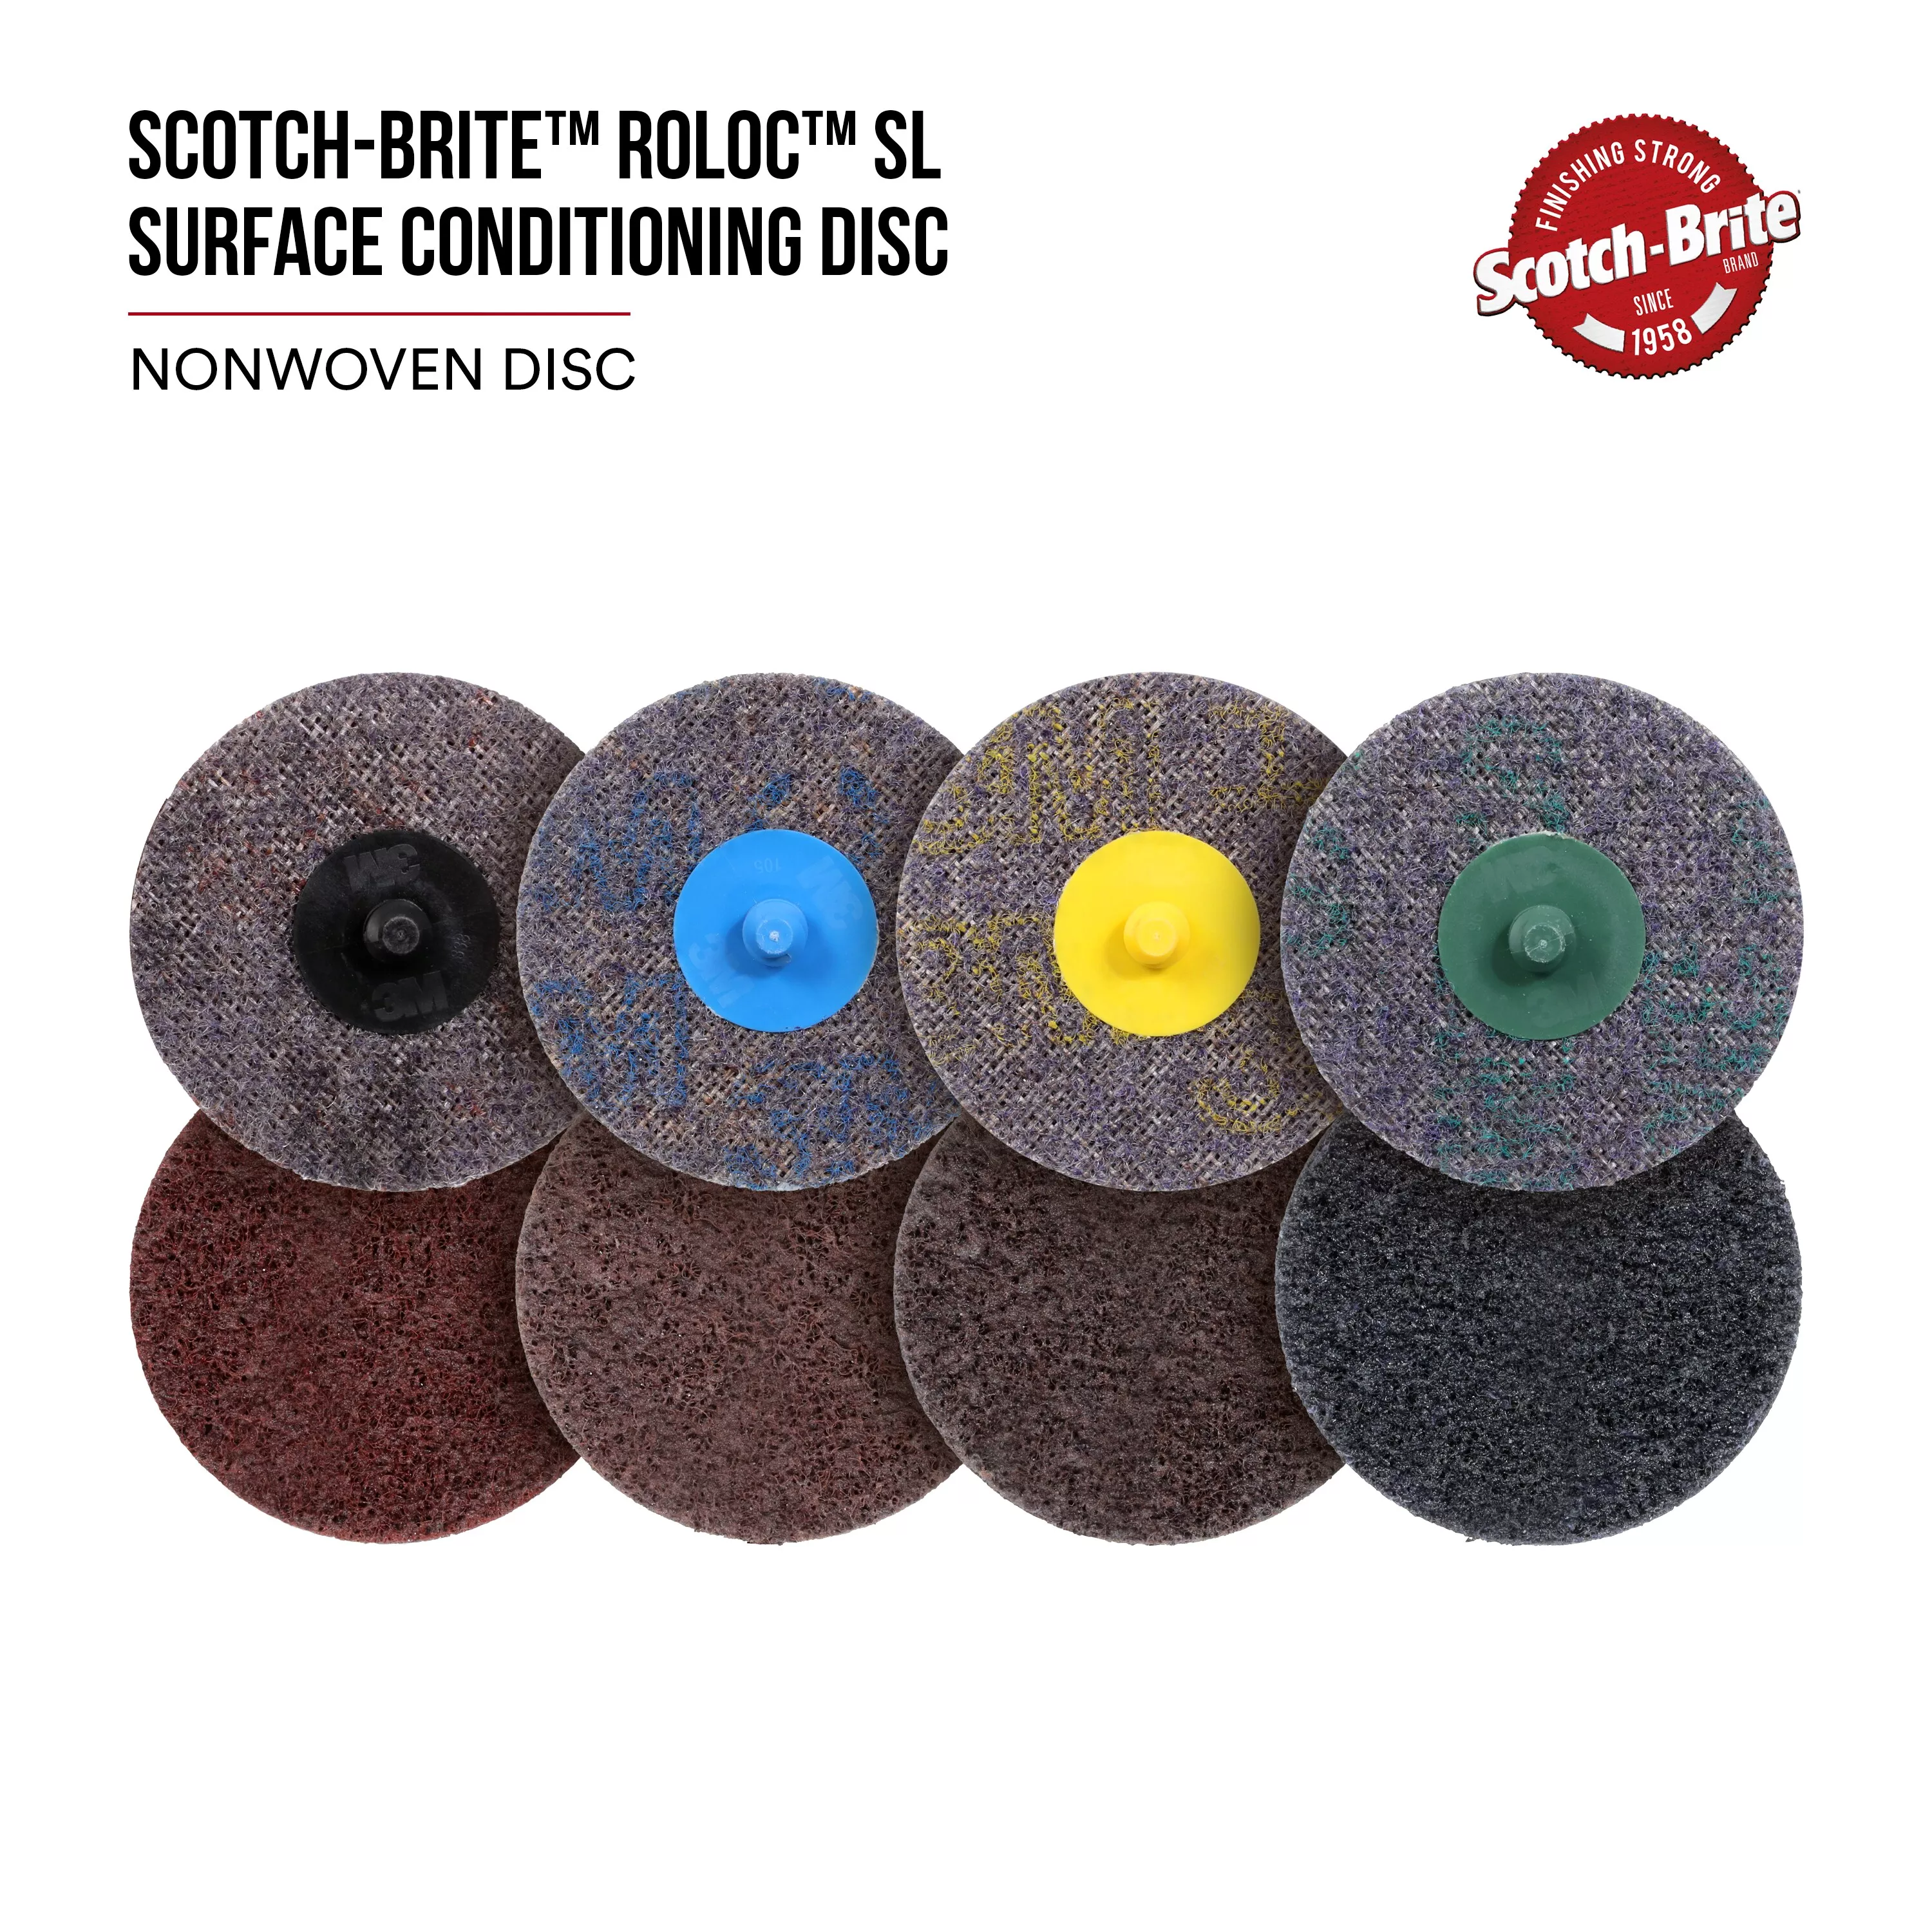 SKU 7000121083 | Scotch-Brite™ Roloc™ SL Surface Conditioning Disc